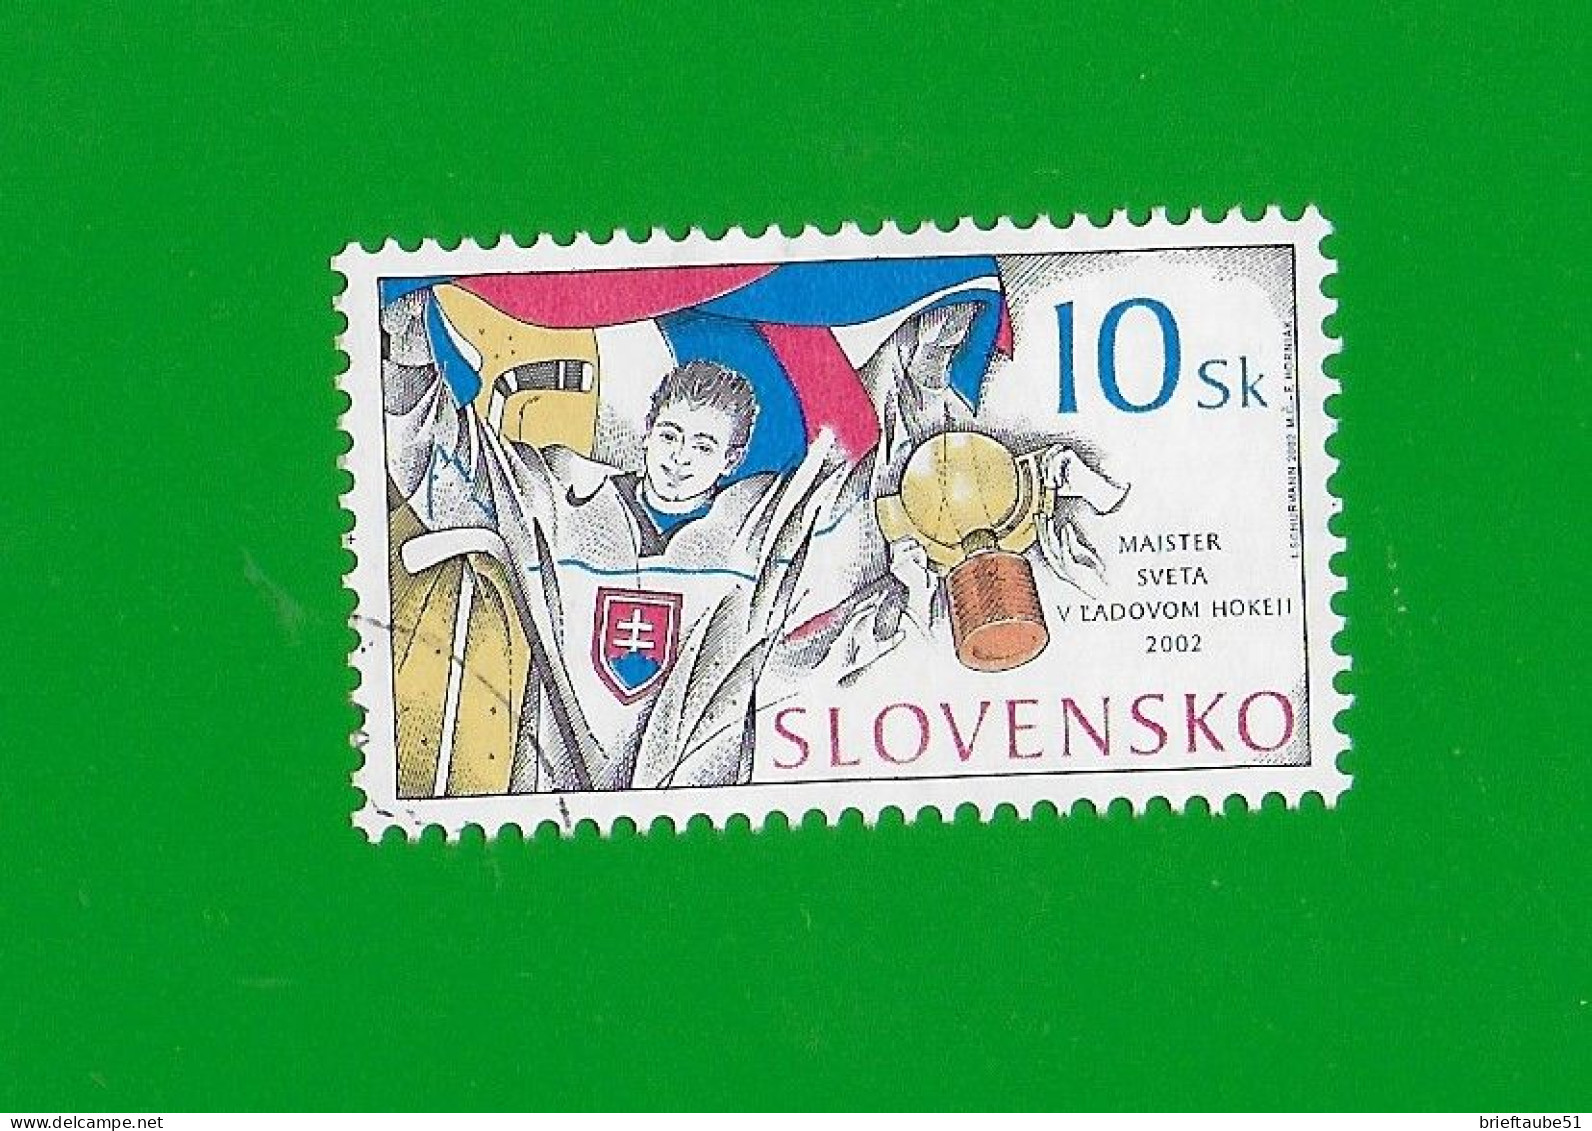 SLOVAKIA REPUBLIC 2002 Gestempelt°Used/Bedarf  MiNr. 432  #  "Eishockey - WM In Schweden # Goldmedaille" - Used Stamps